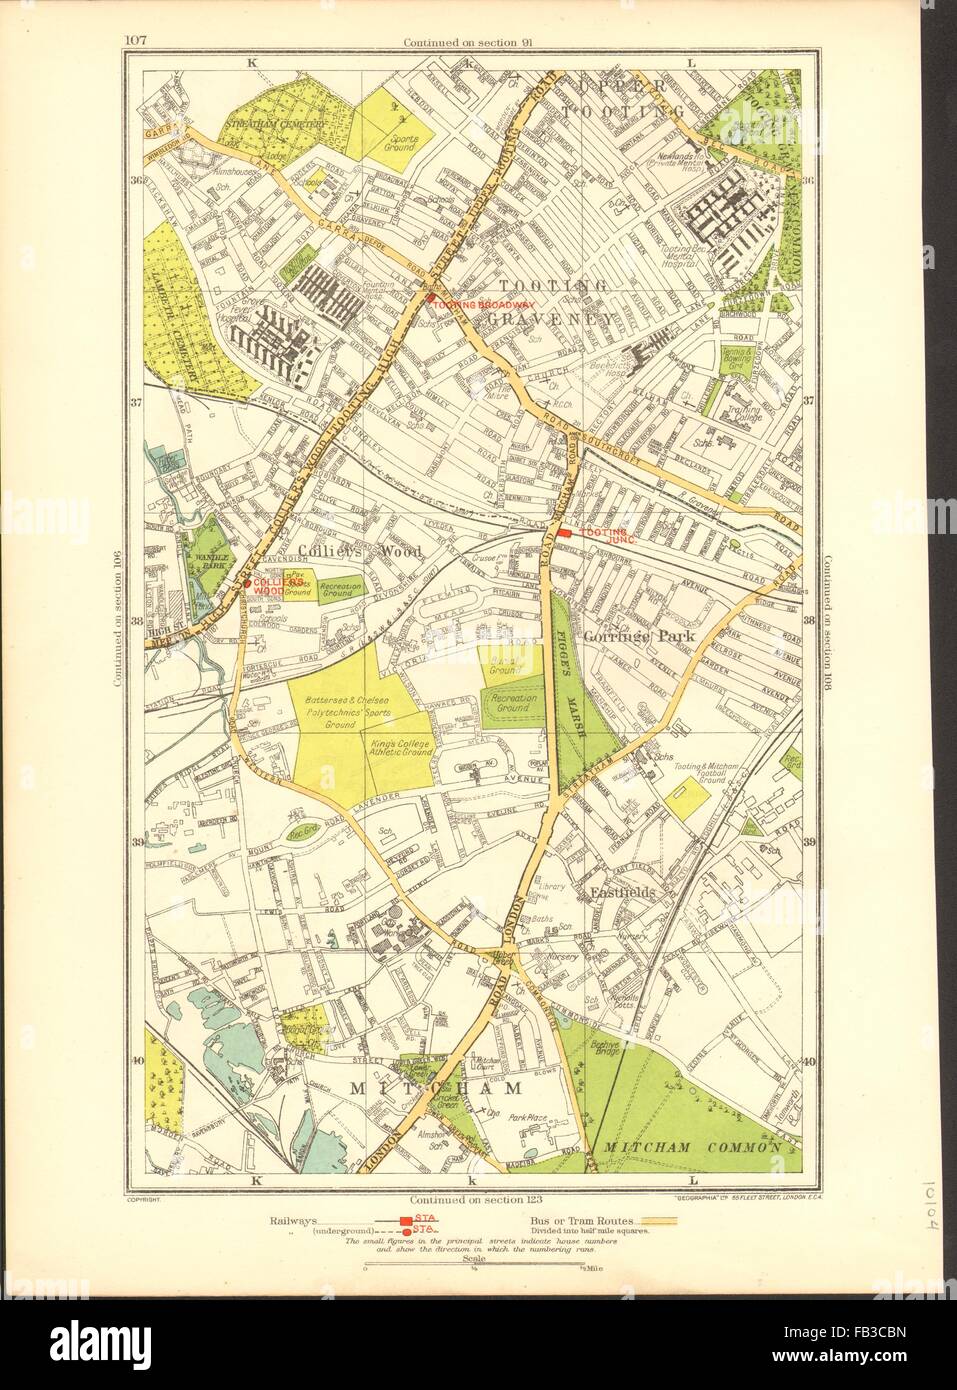 MITCHAM: Collier's Wood, Tooting Graveney, Furzedown, Eastfields, 1937 old map Stock Photo